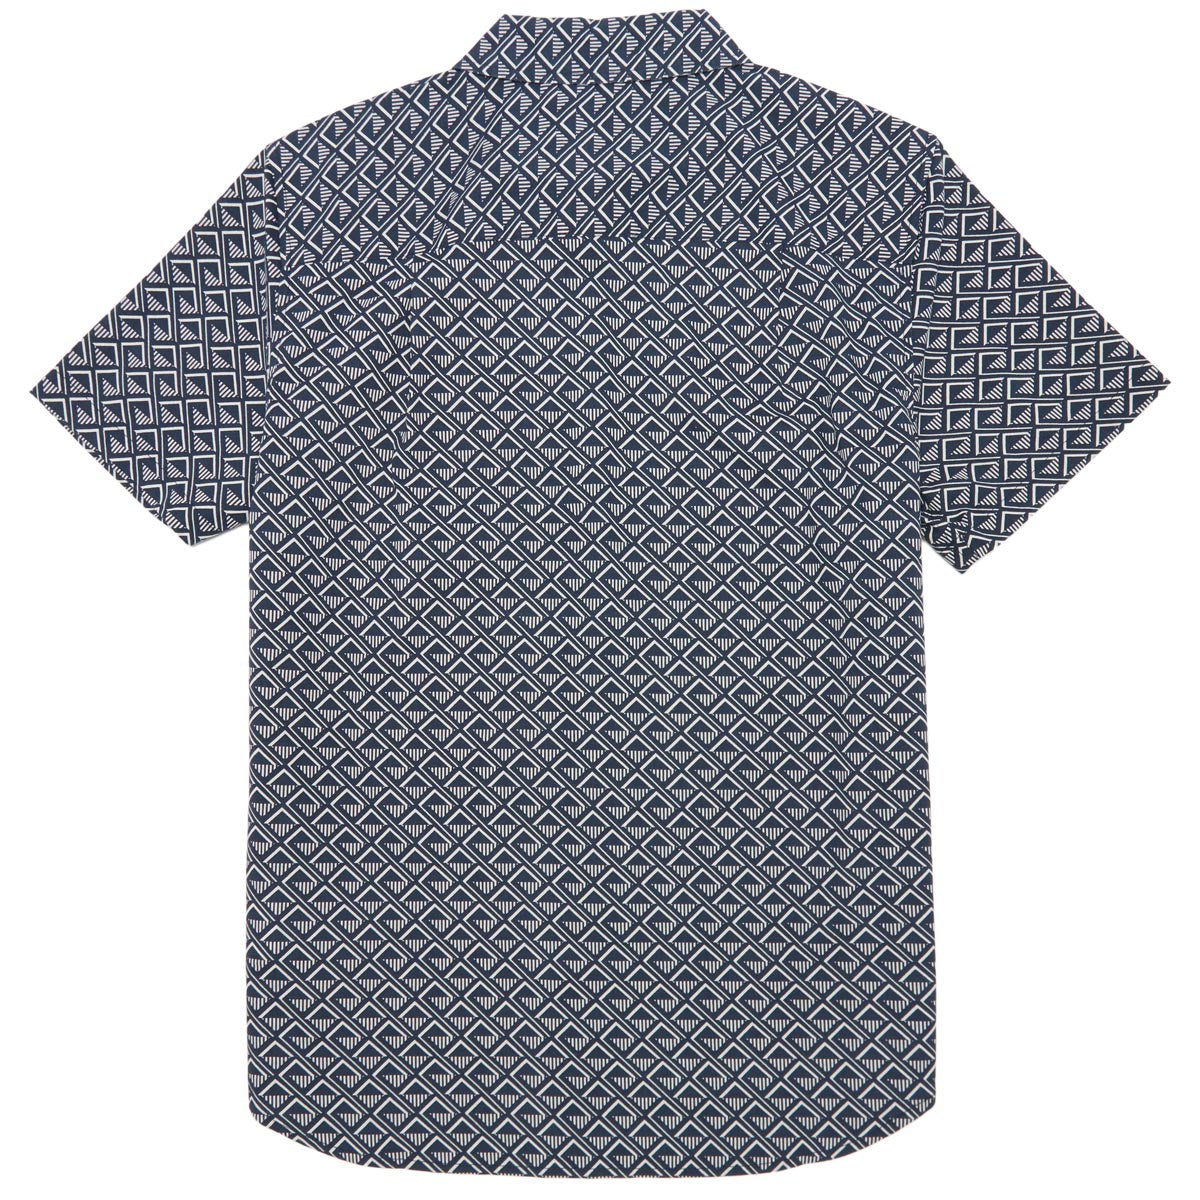 Brixton Charter Print Shirt - Washed Navy/White Tile image 2